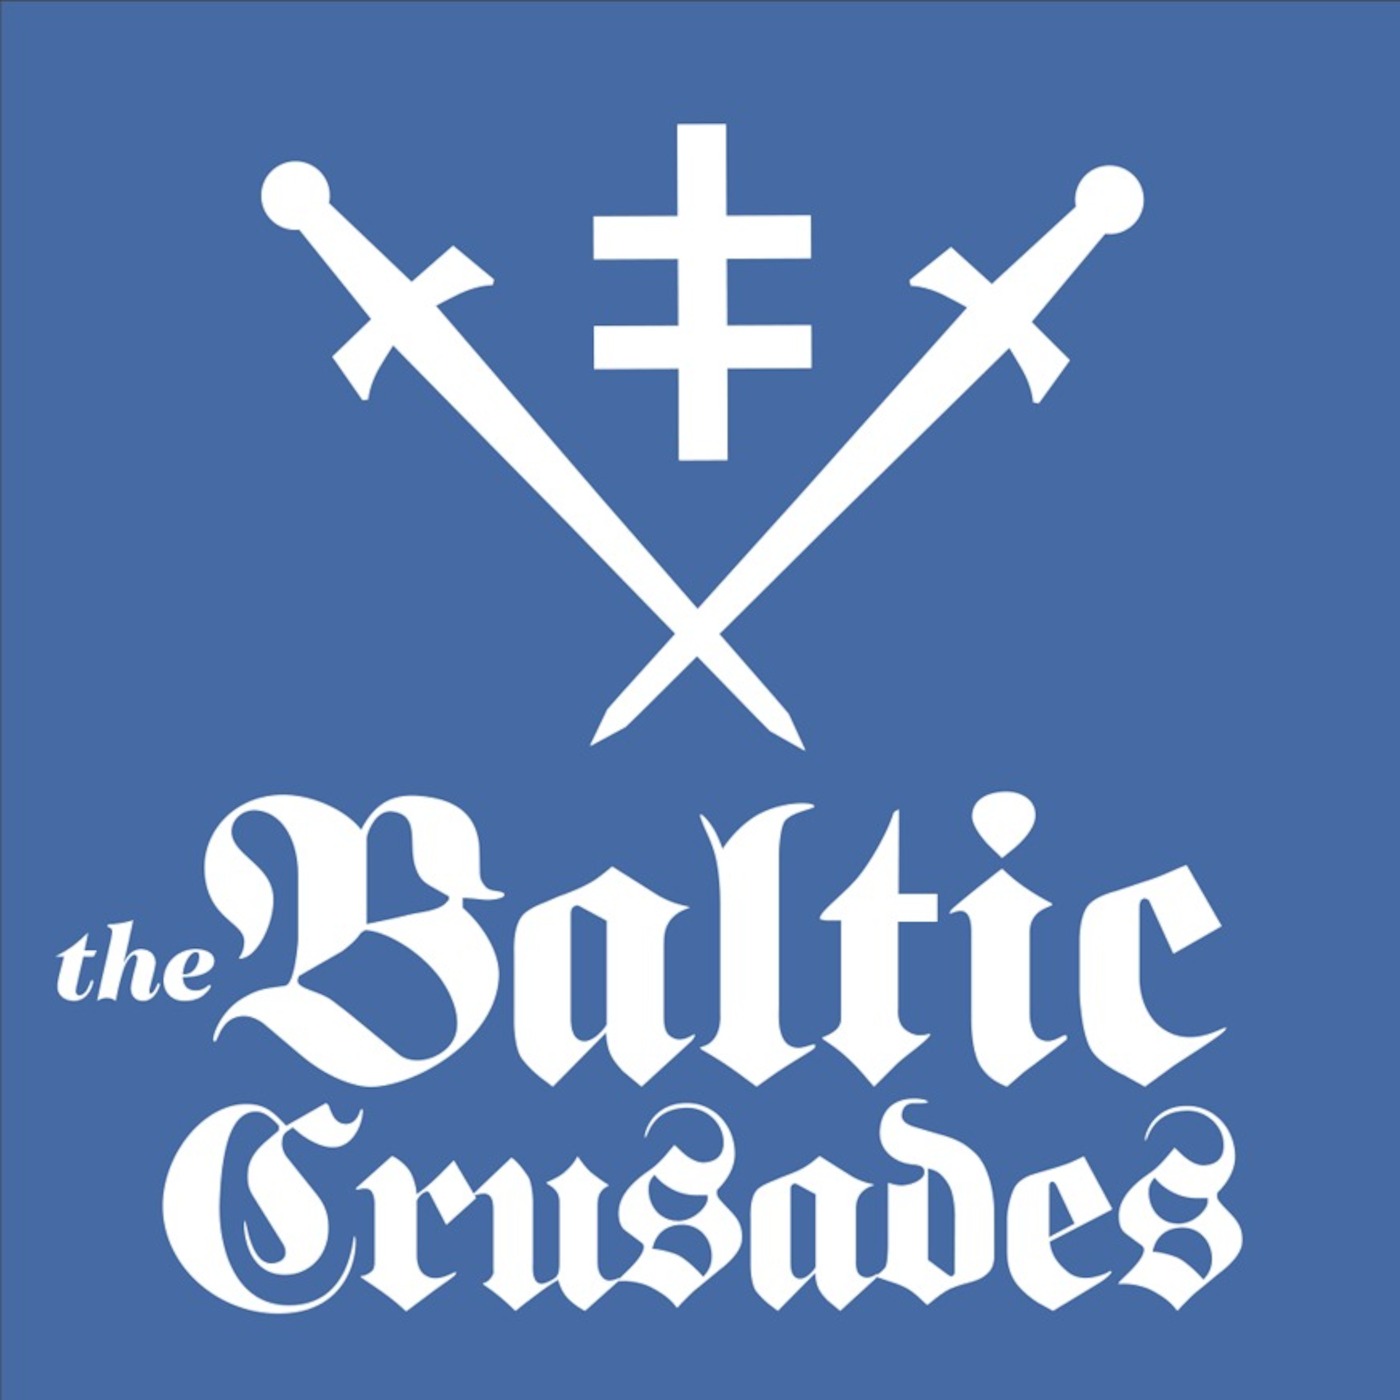 Episode 234 - The Baltic Crusades